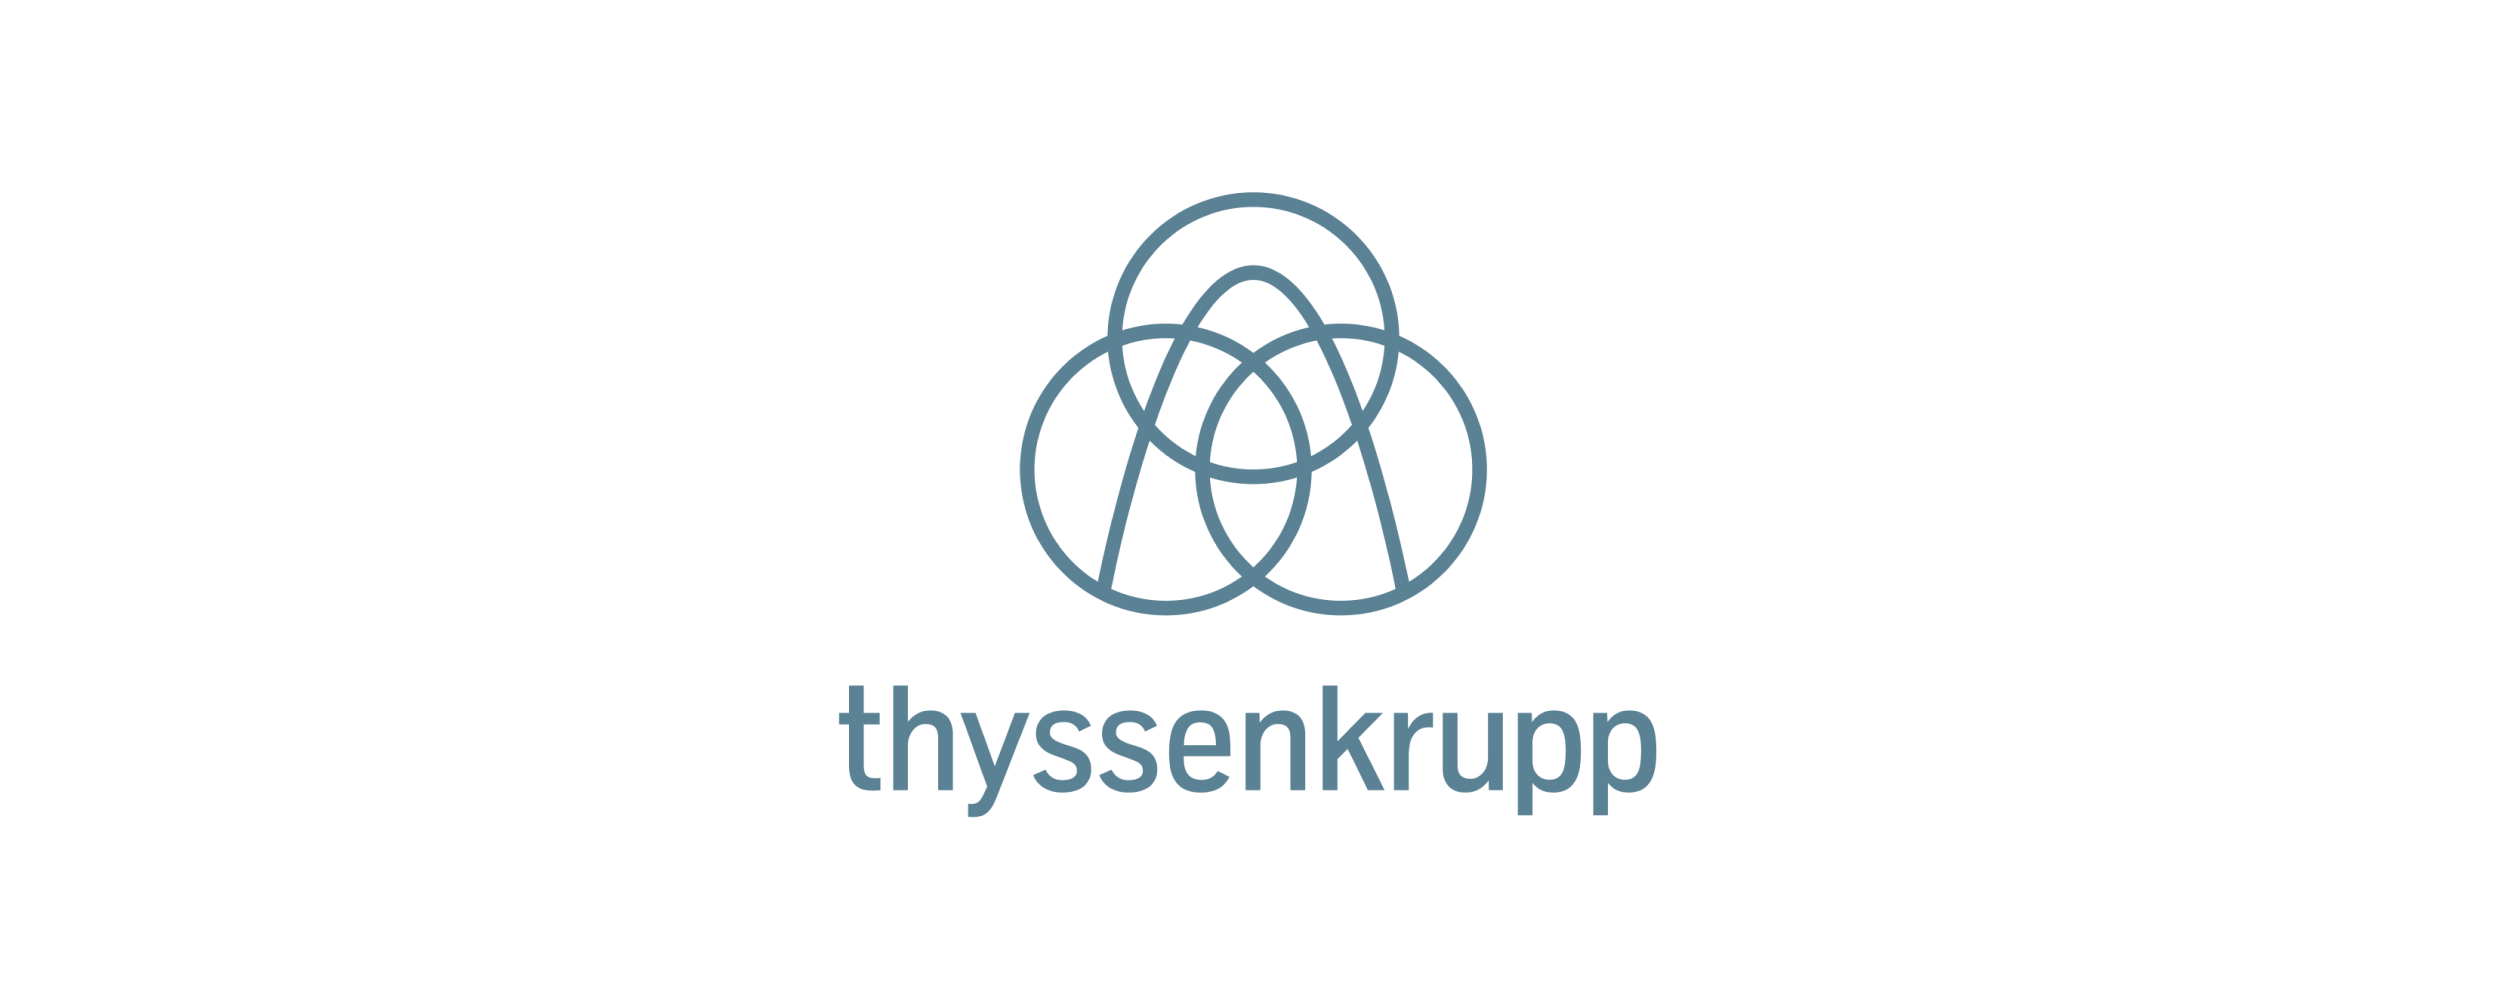 logo-thyssenkrup.png